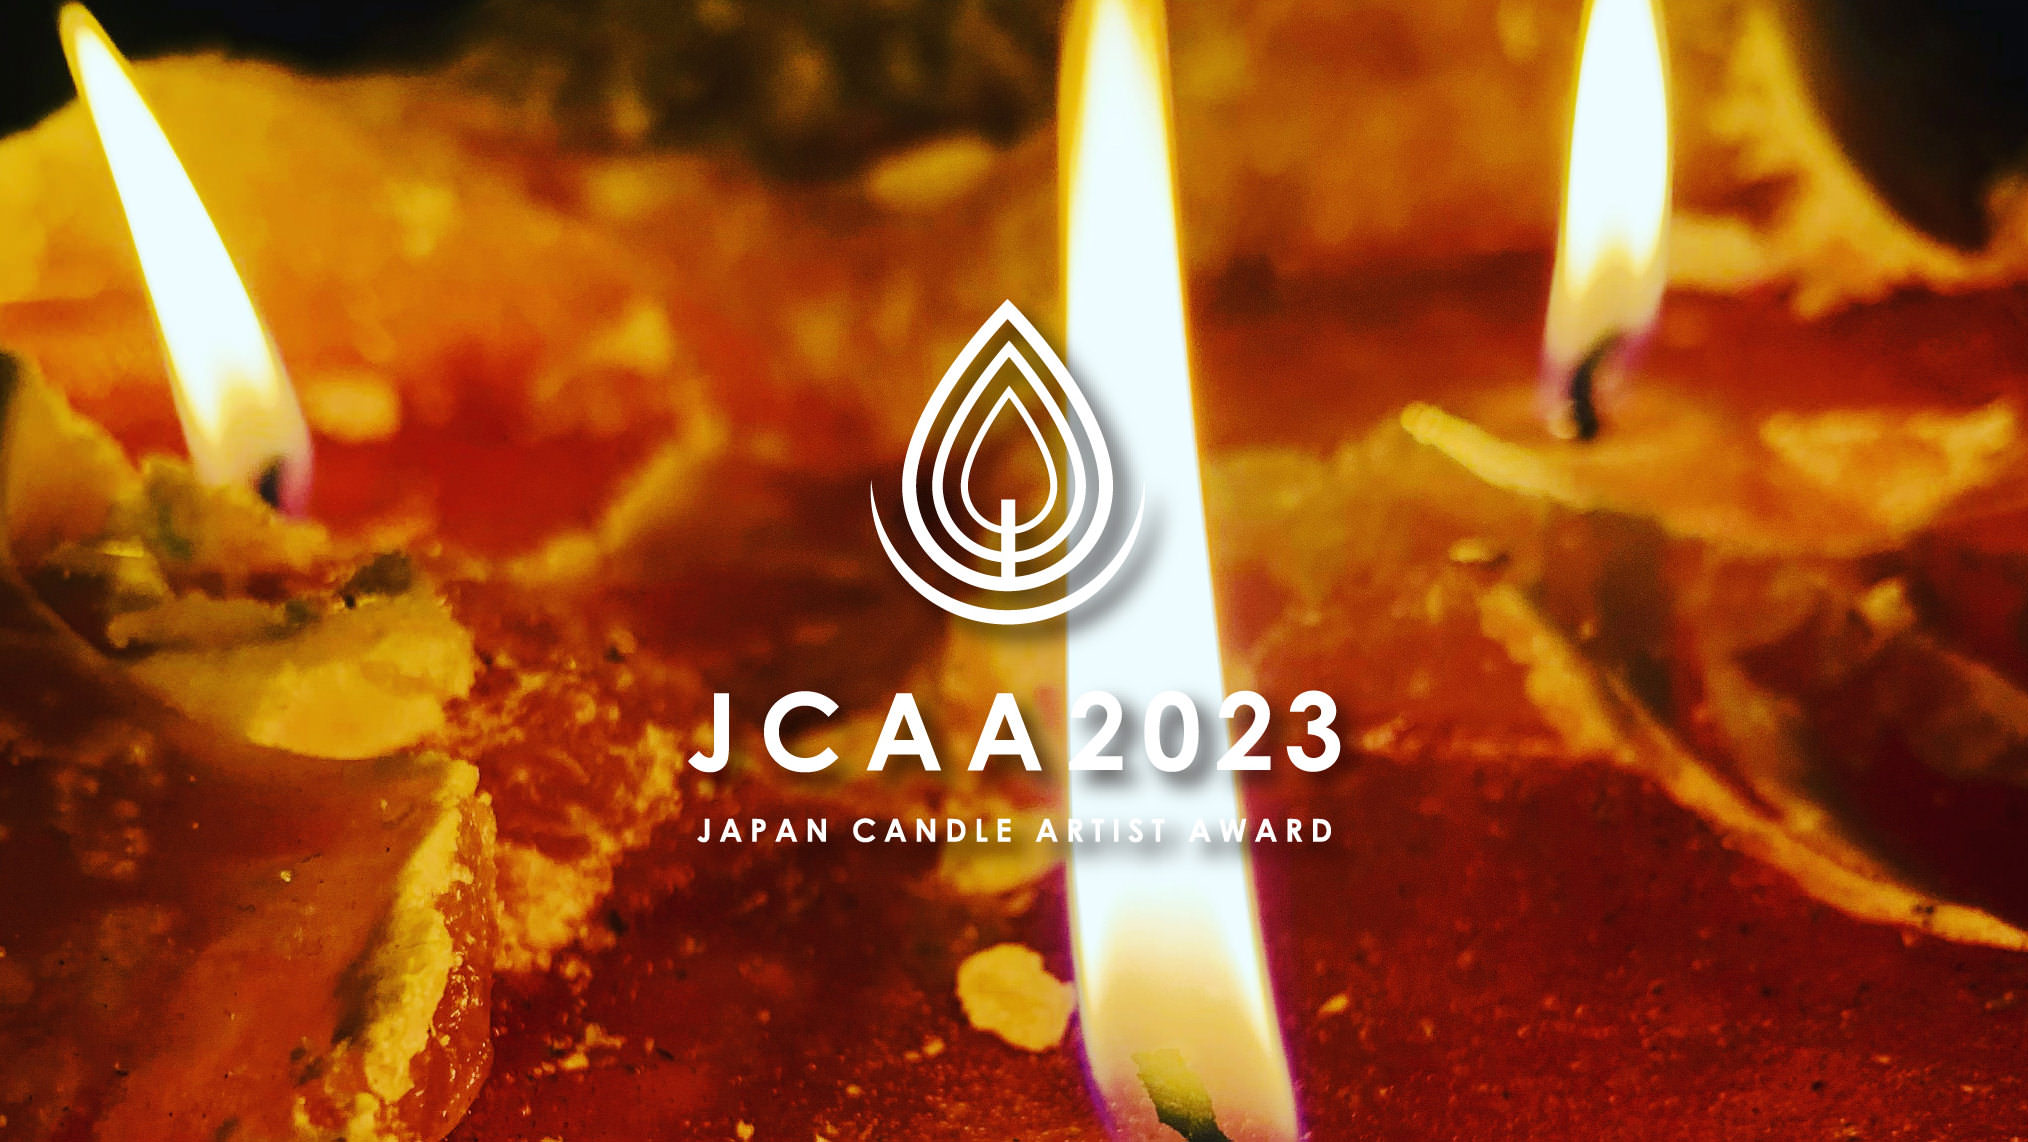 JCAA JAPAN CANDLE ARTIST AWARD